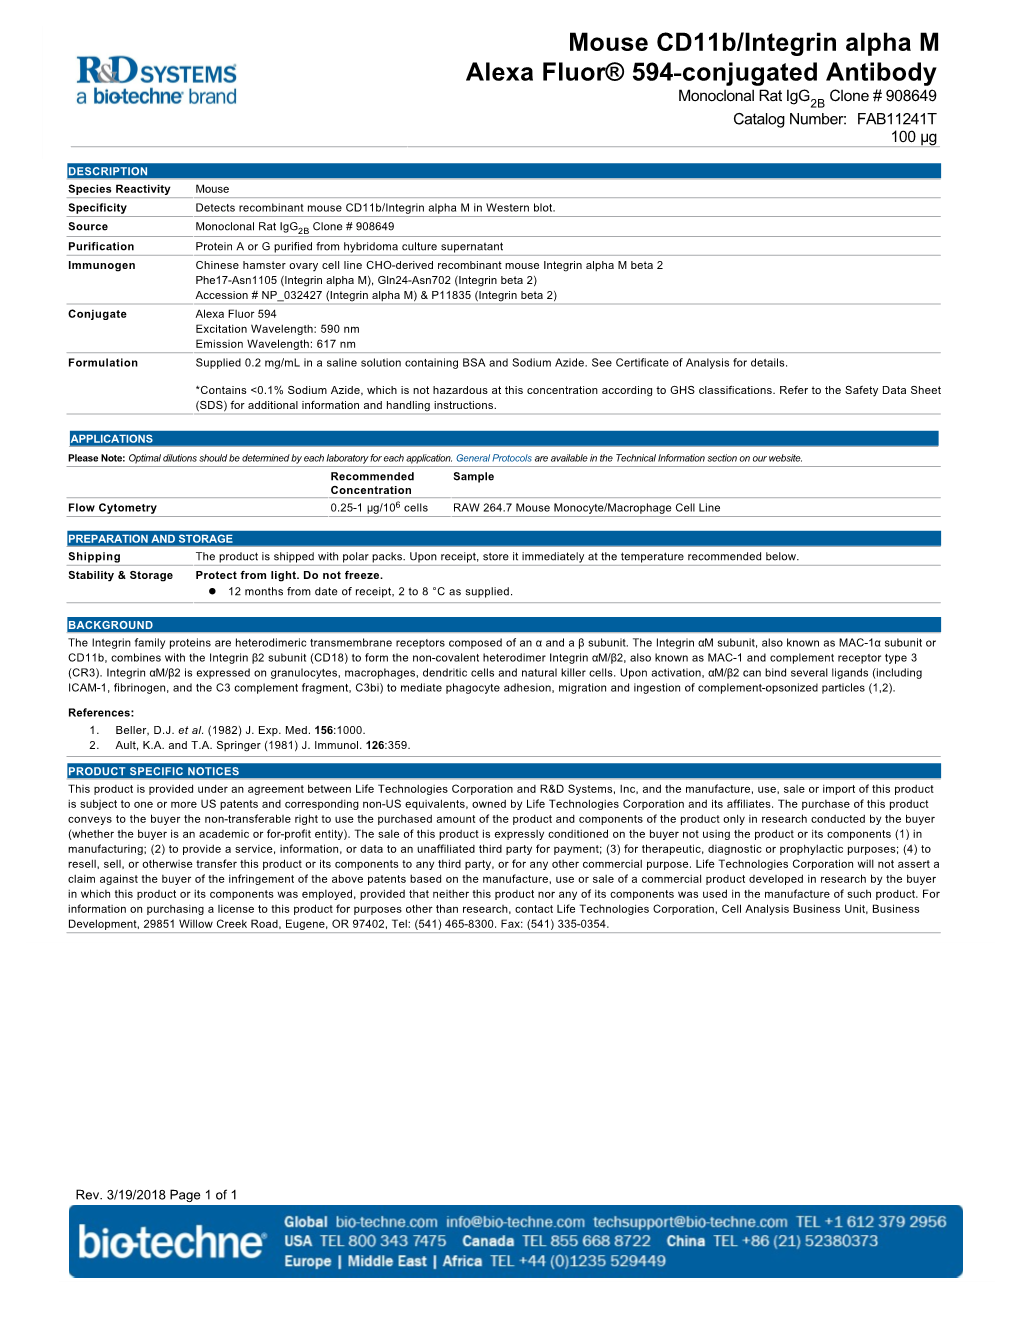 Mouse Cd11b/Integrin Alpha M Alexa Fluor® 594-Conjugated Antibody